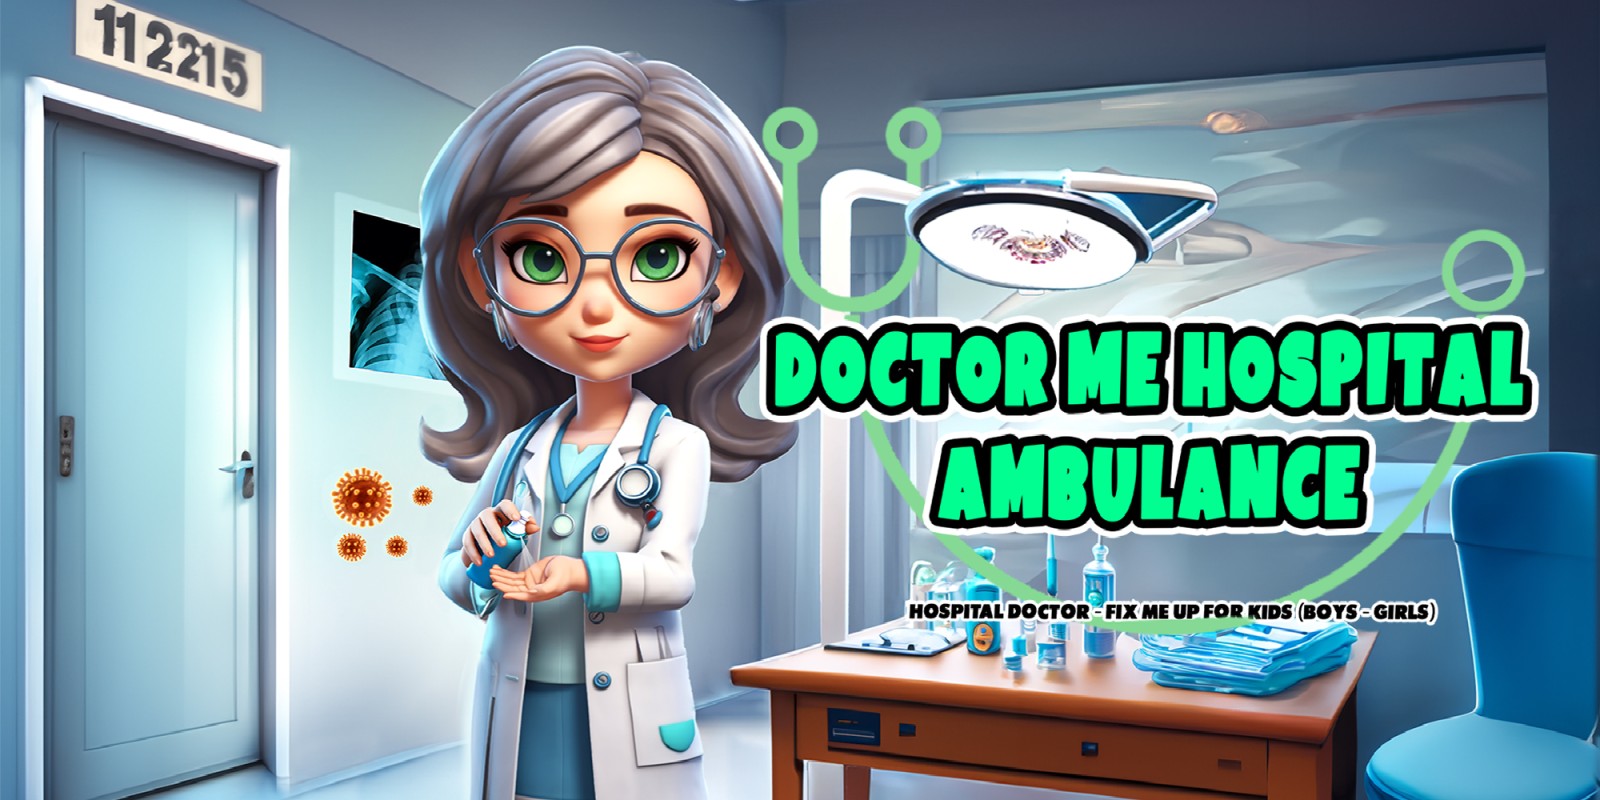 Hospital Doctor - Fix me up for KIDS (Boys & Girls)